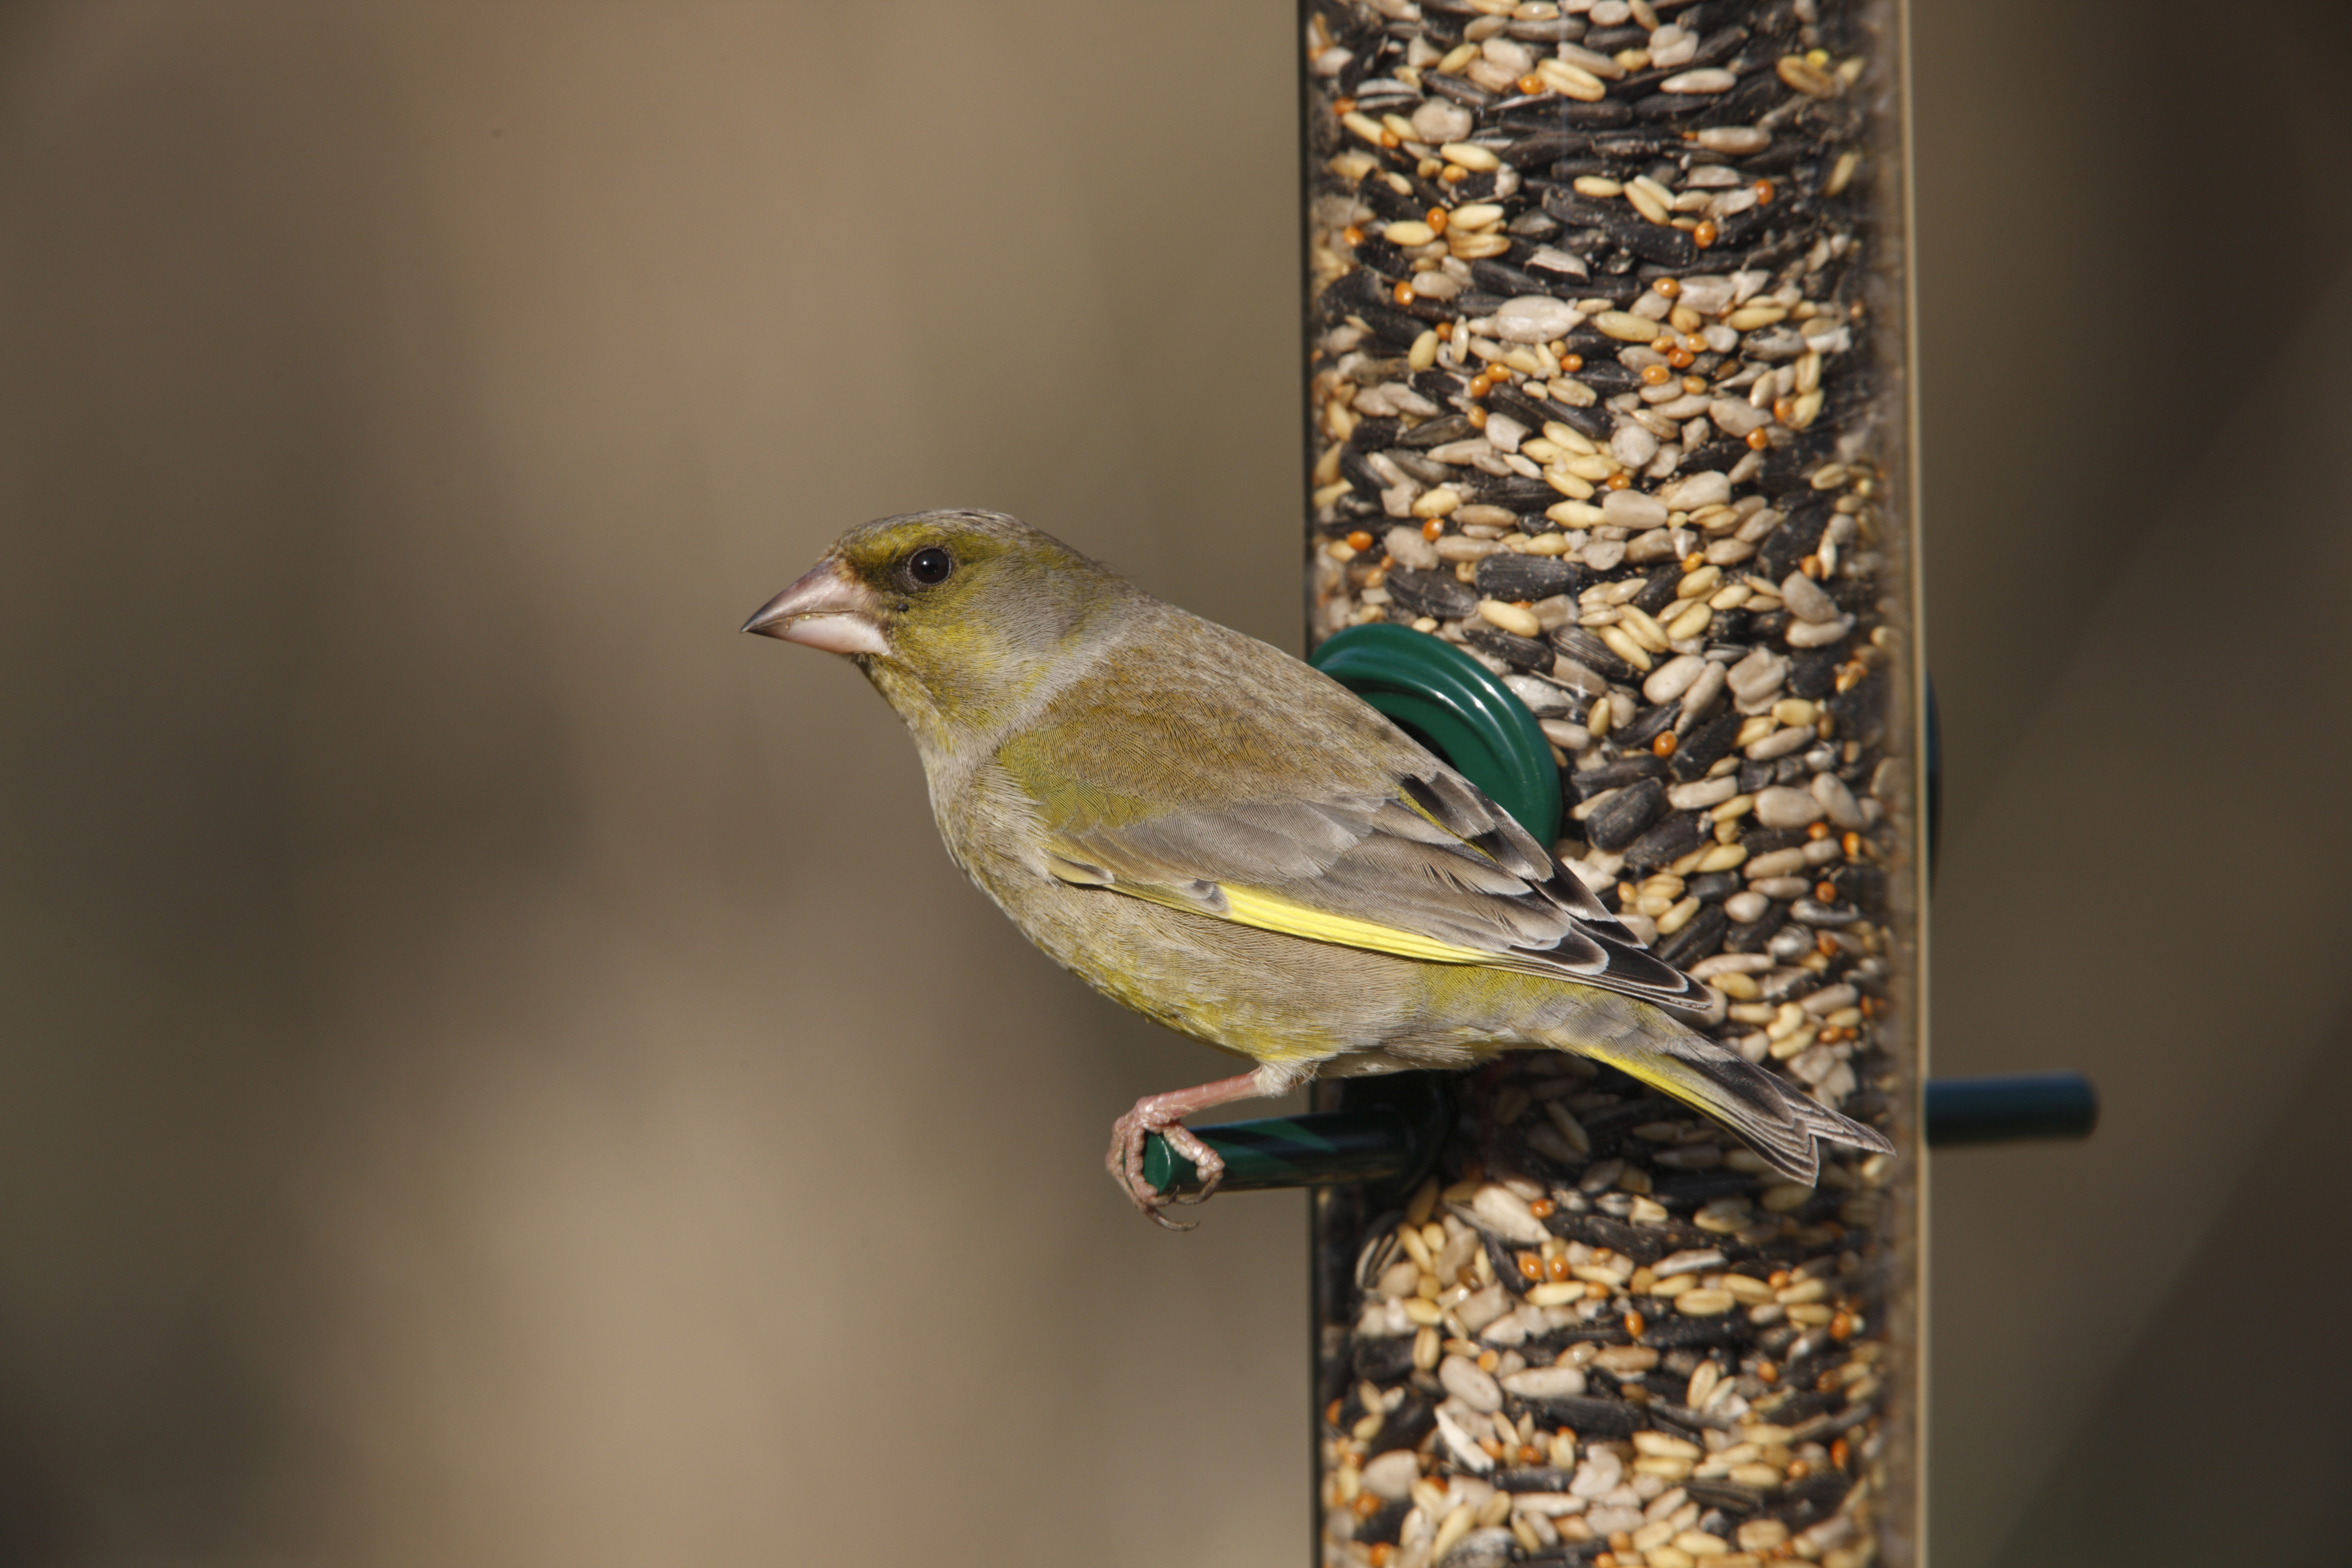 A greenfinch on a bird feeder